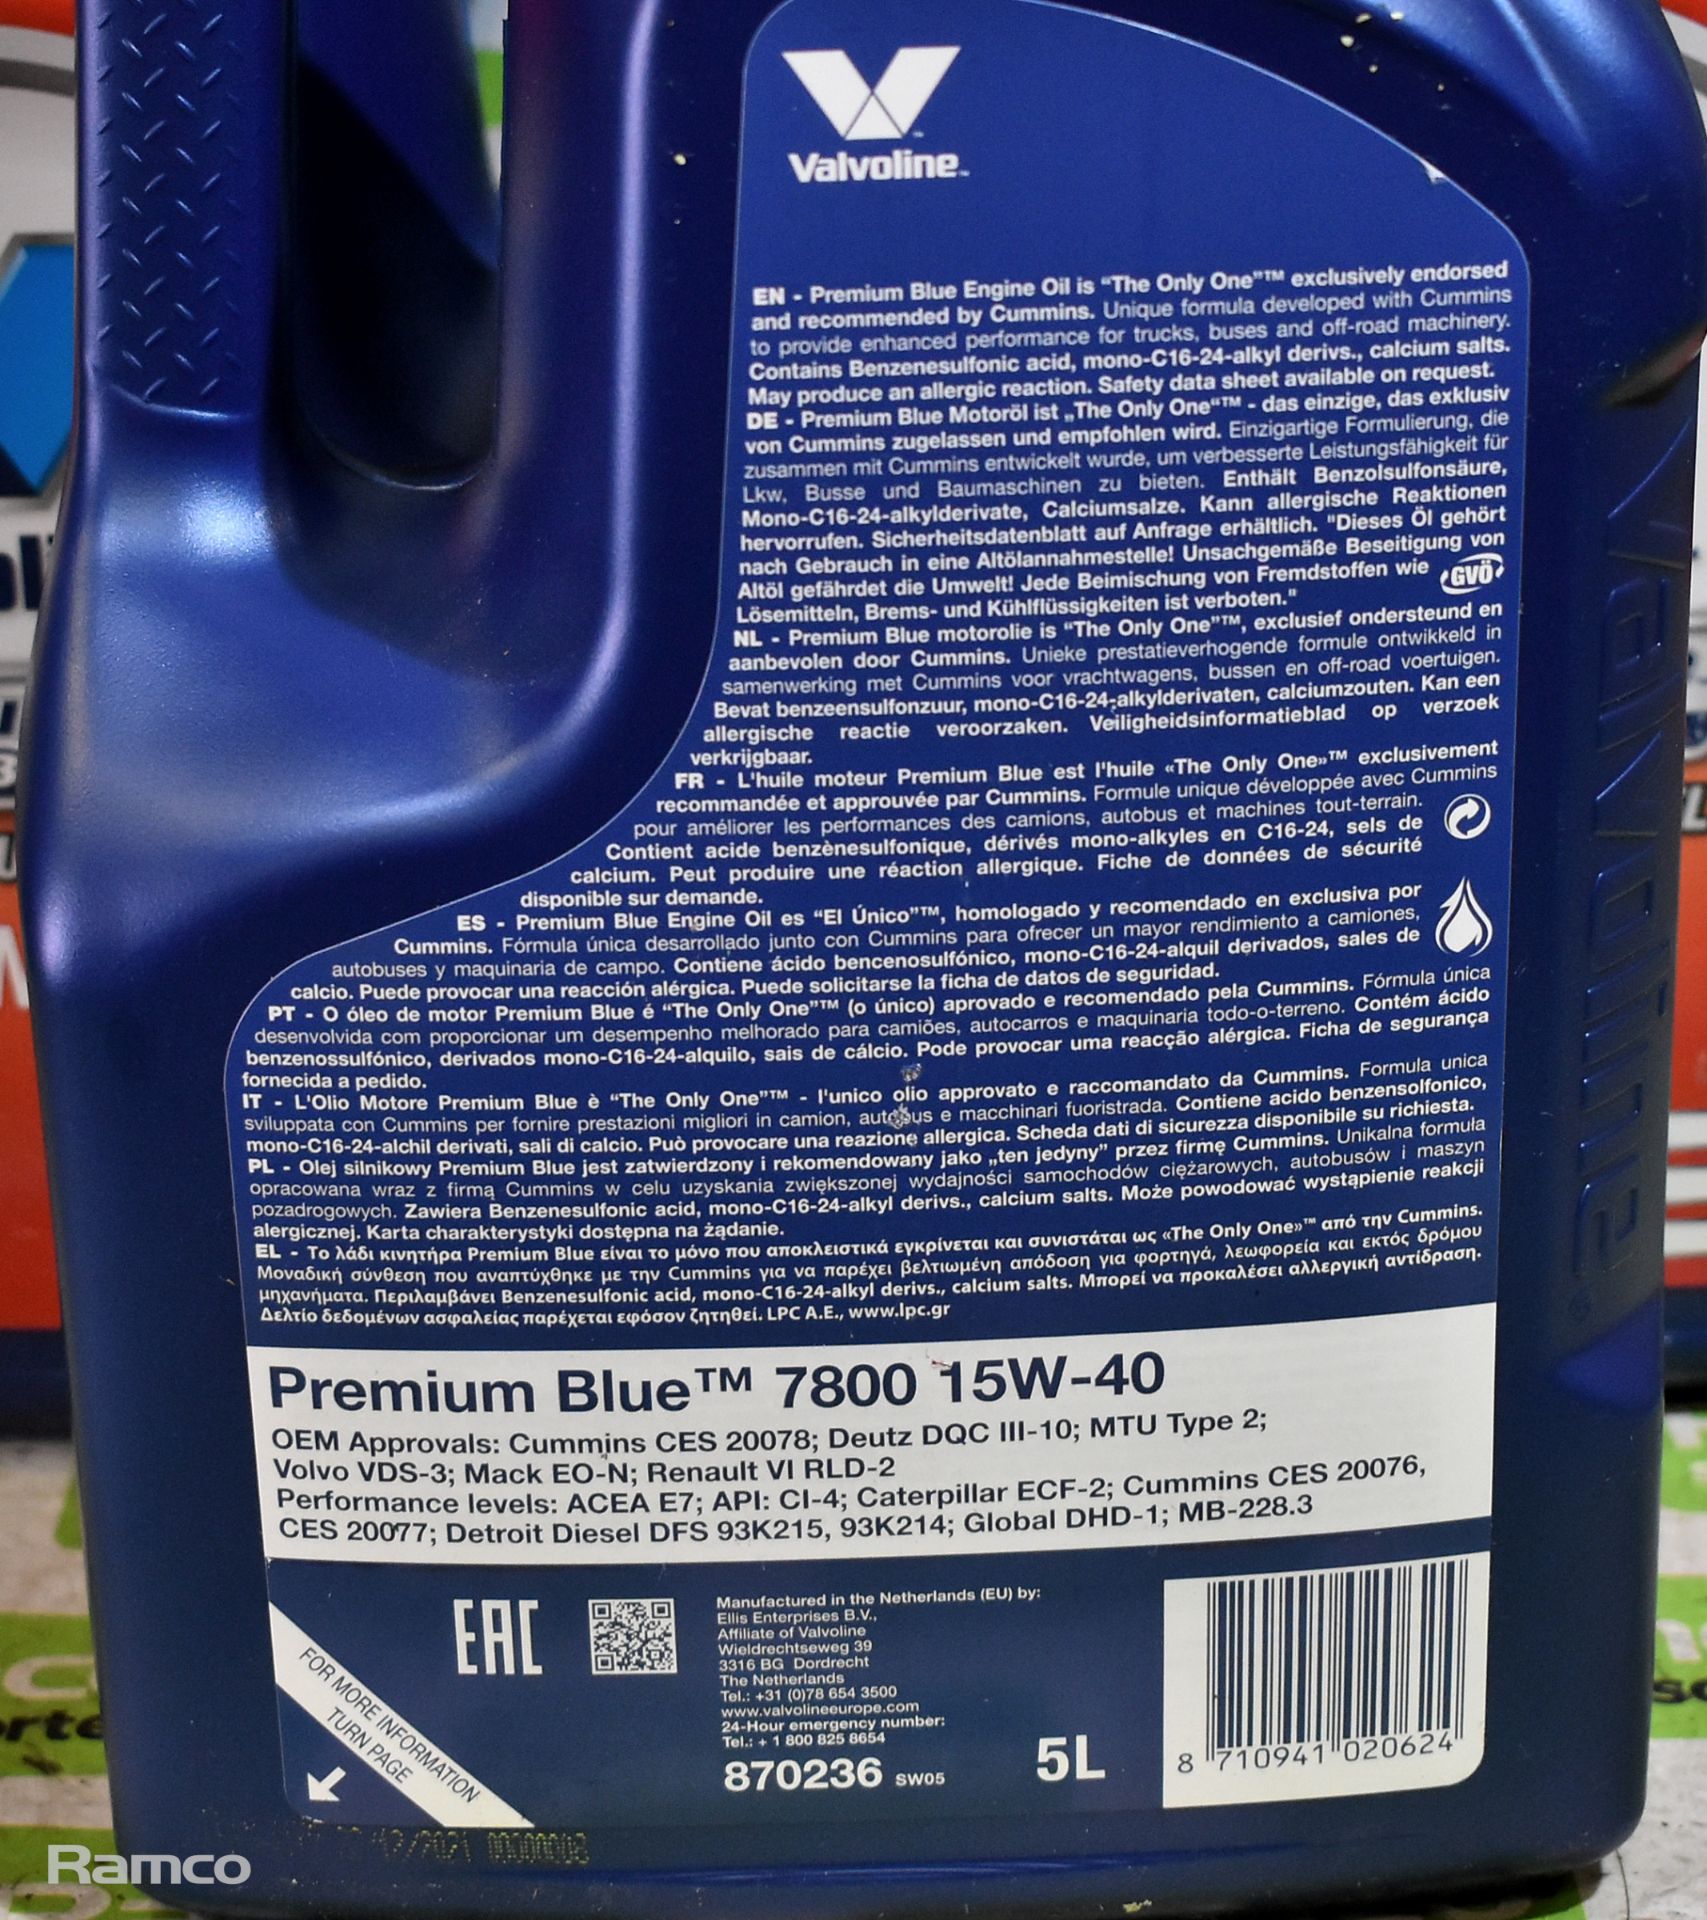 3x 5L bottles of Valvoline Premium Blue 7800 15W-40 heavy duty diesel oil - Image 3 of 3